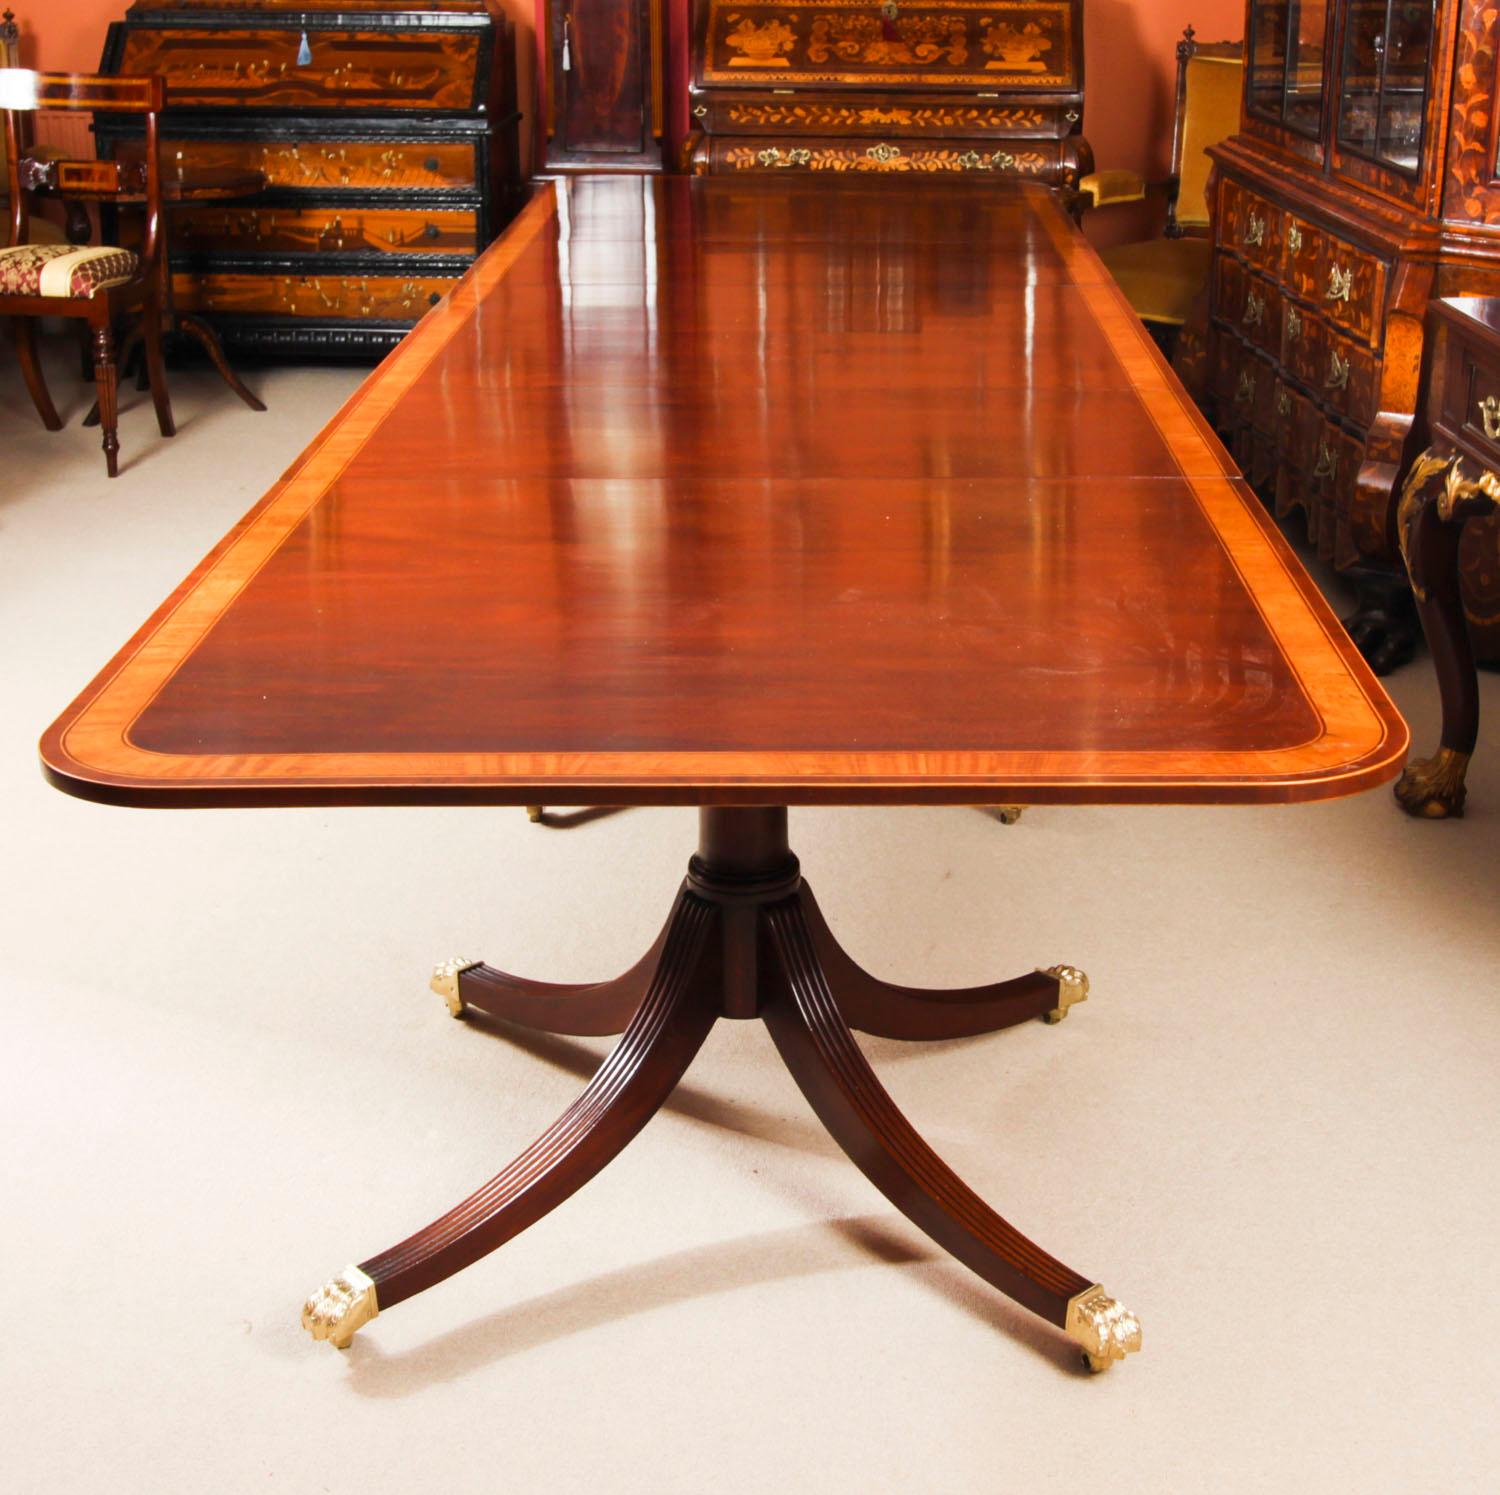 Antique Regency Revival Metamorphic Dining Table, 19th Century 14